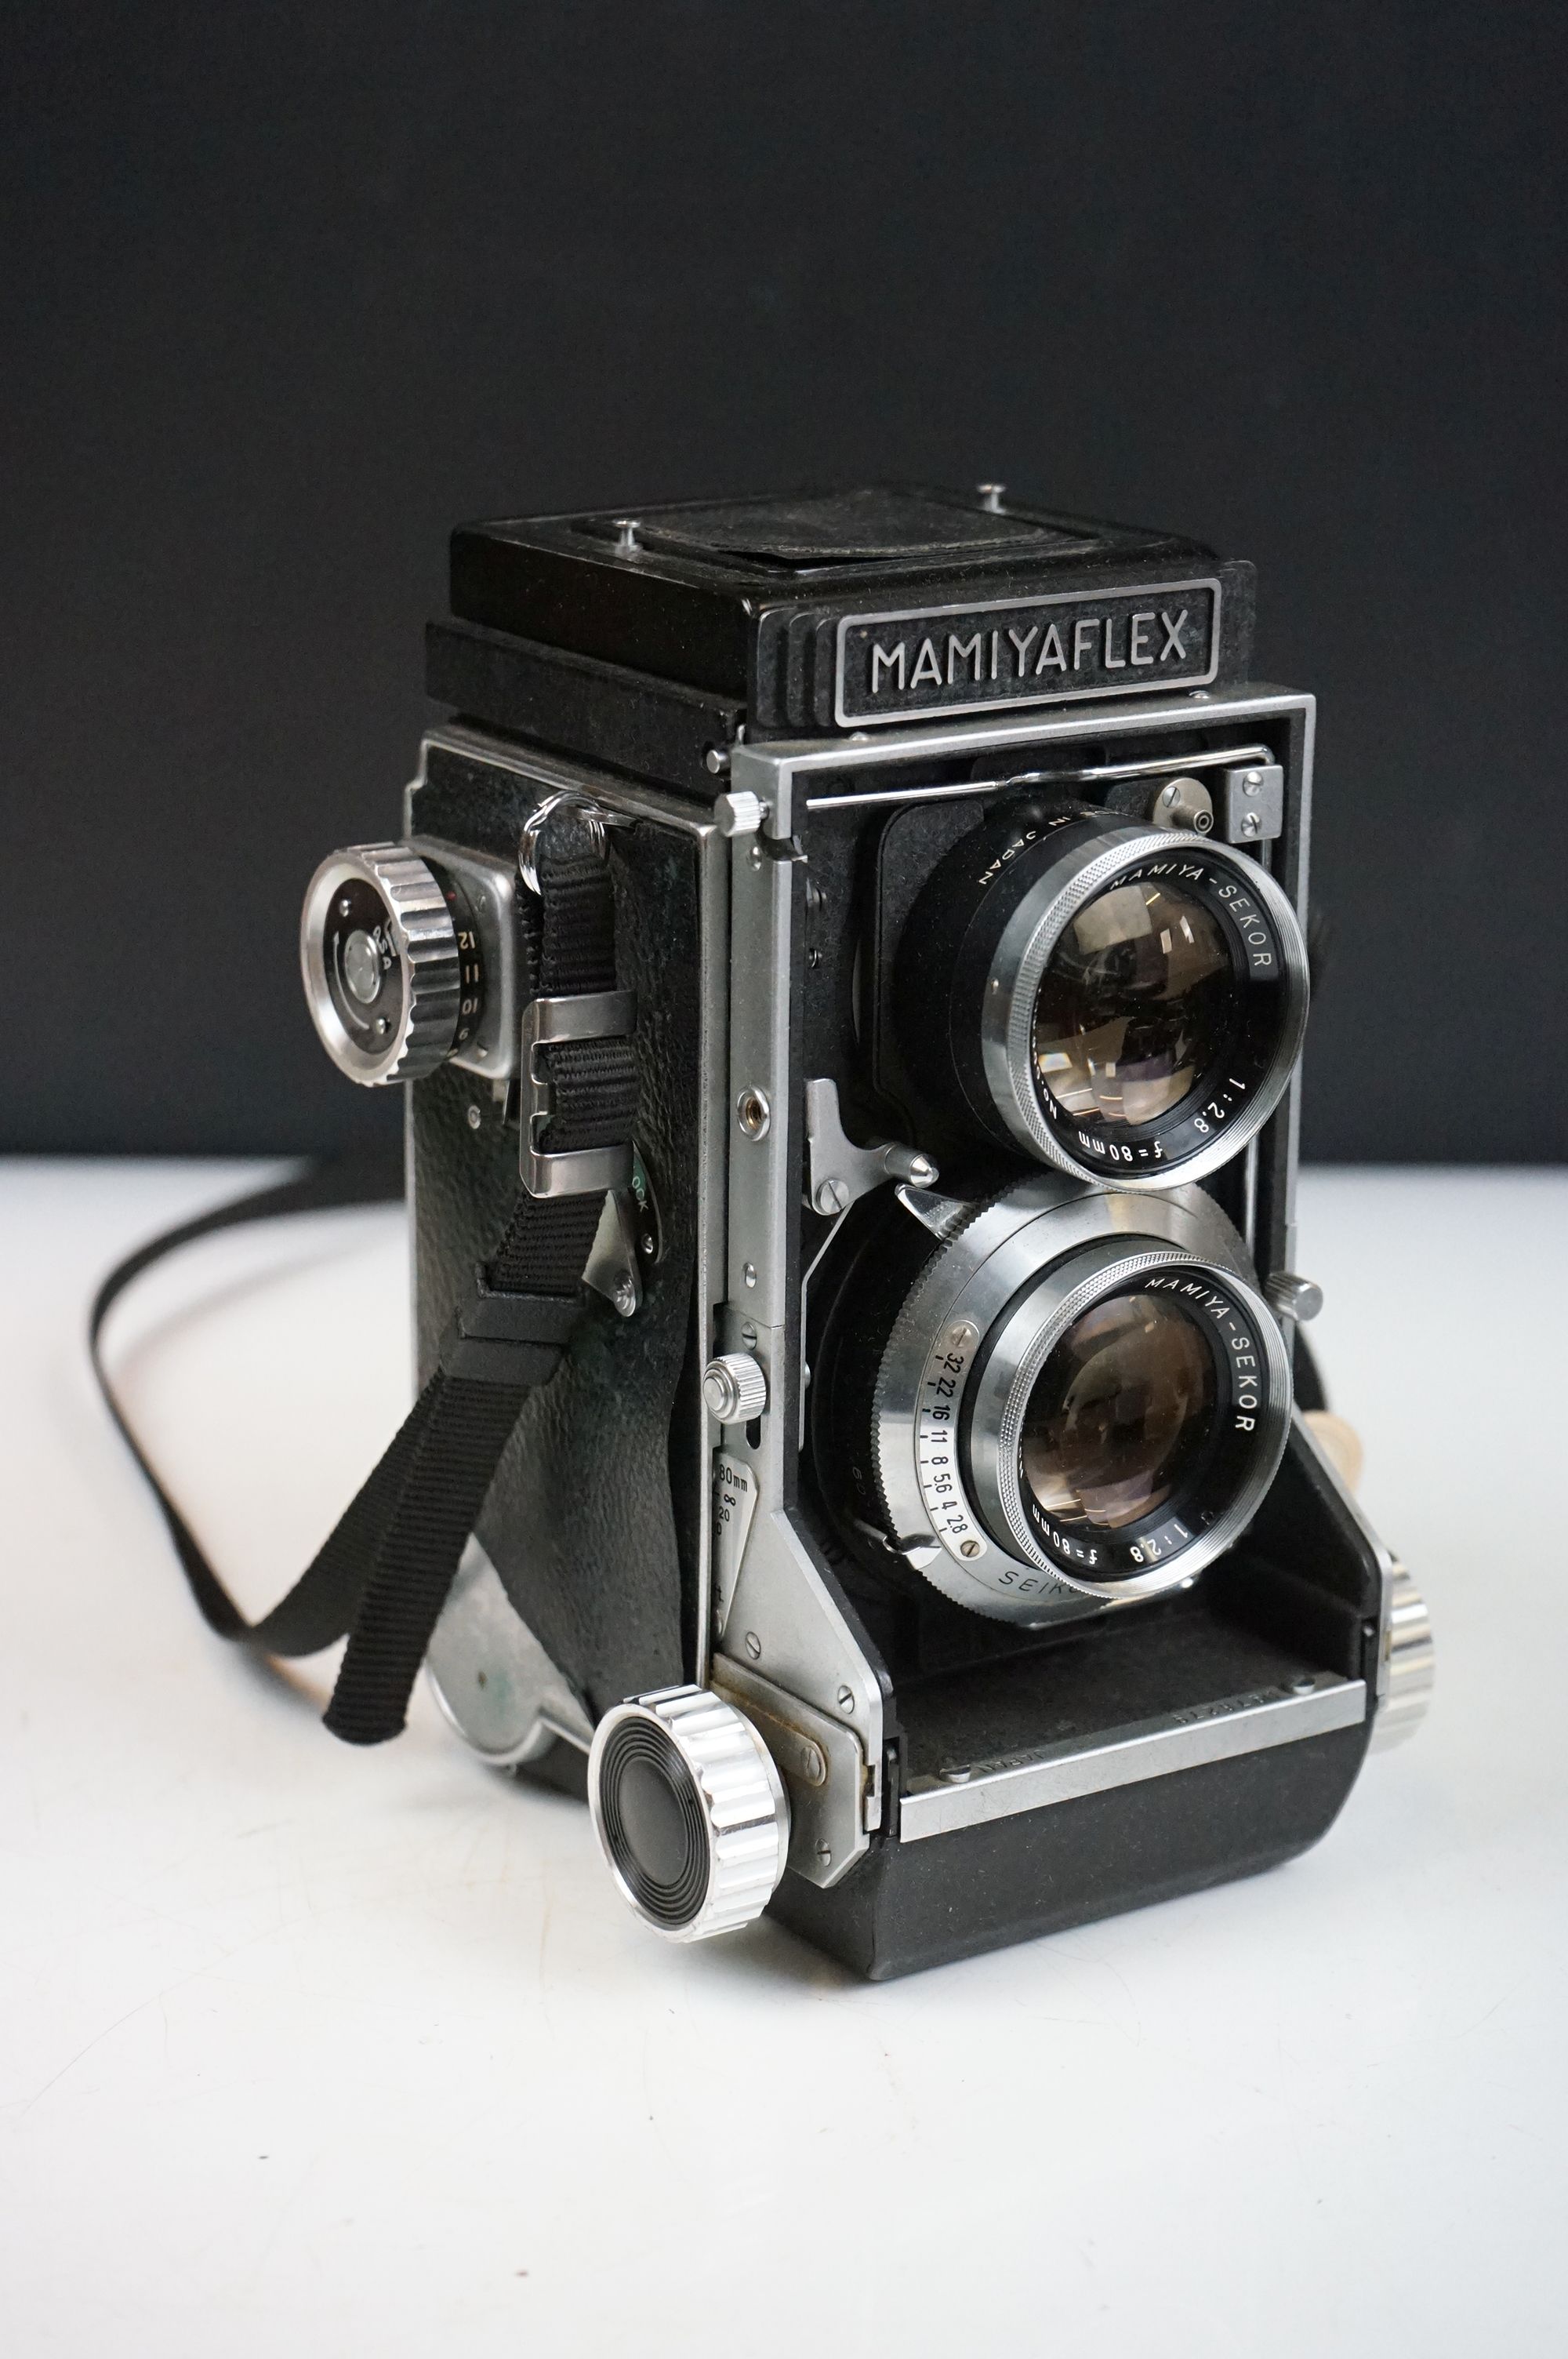 Mamiya Flex C Professional Medium Format Camera with accessories - Image 2 of 14